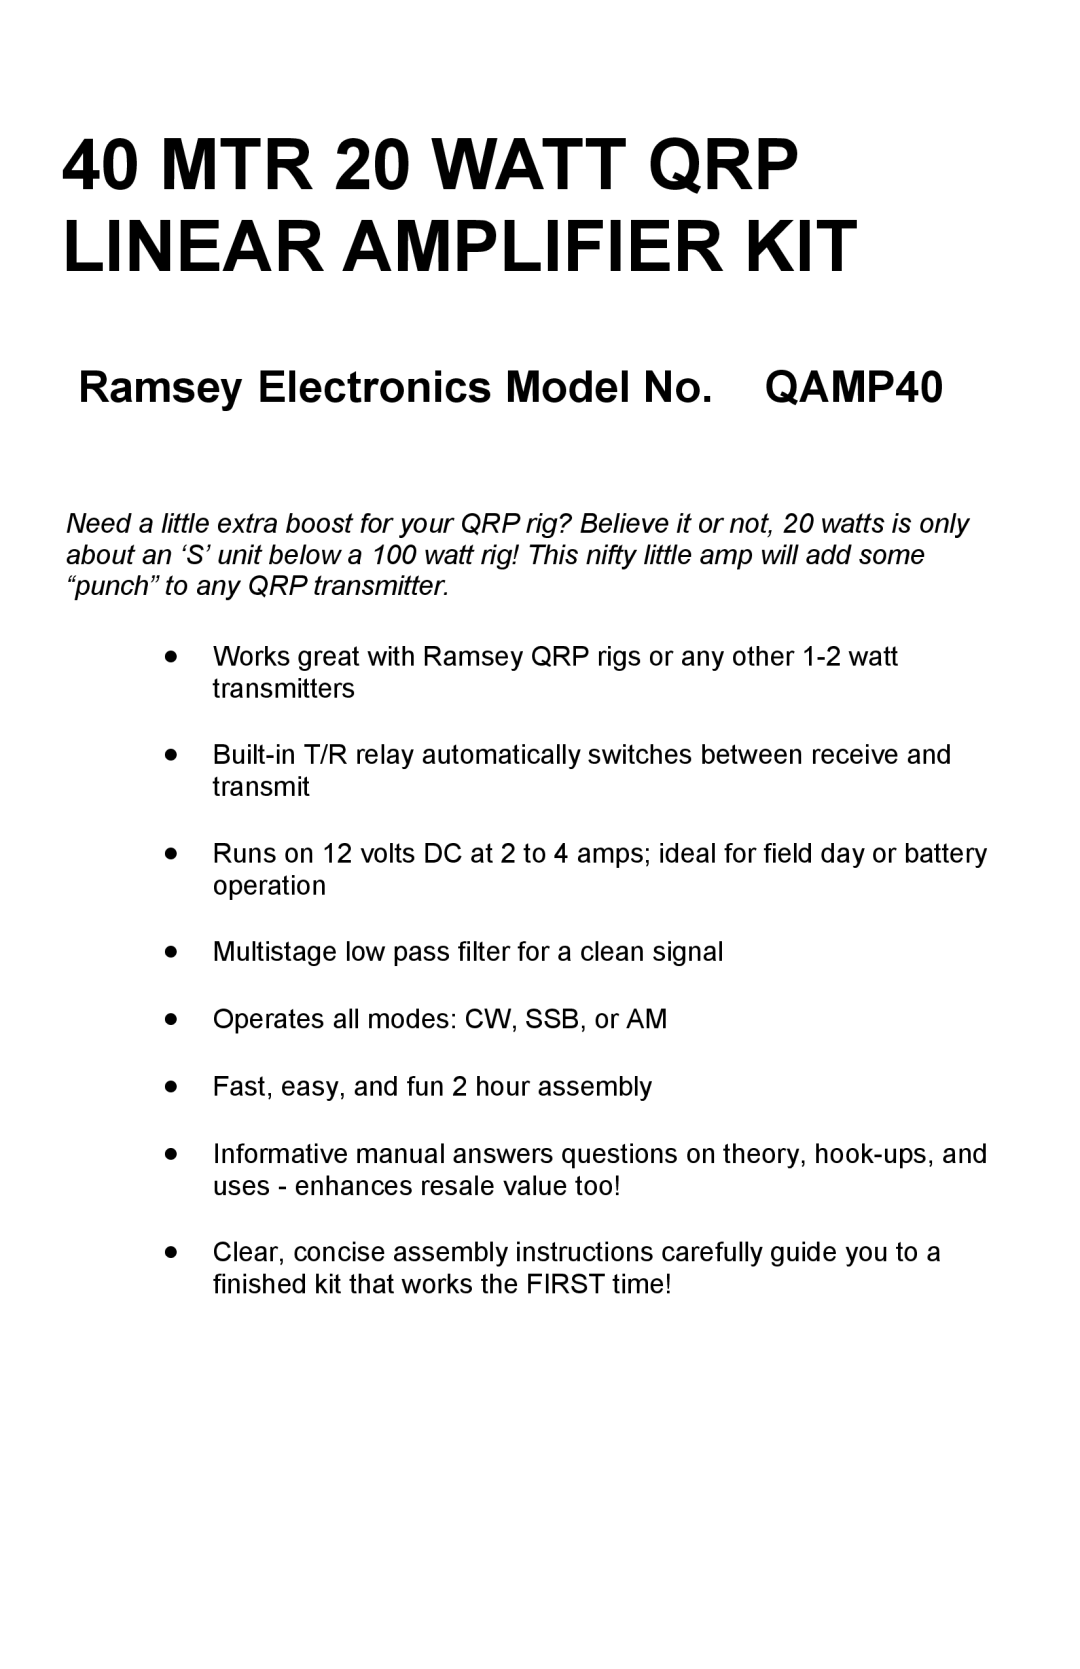 Ramsey Electronics manual MTR 20 WATT QRP LINEAR AMPLIFIER KIT, Ramsey Electronics Model No. QAMP40 